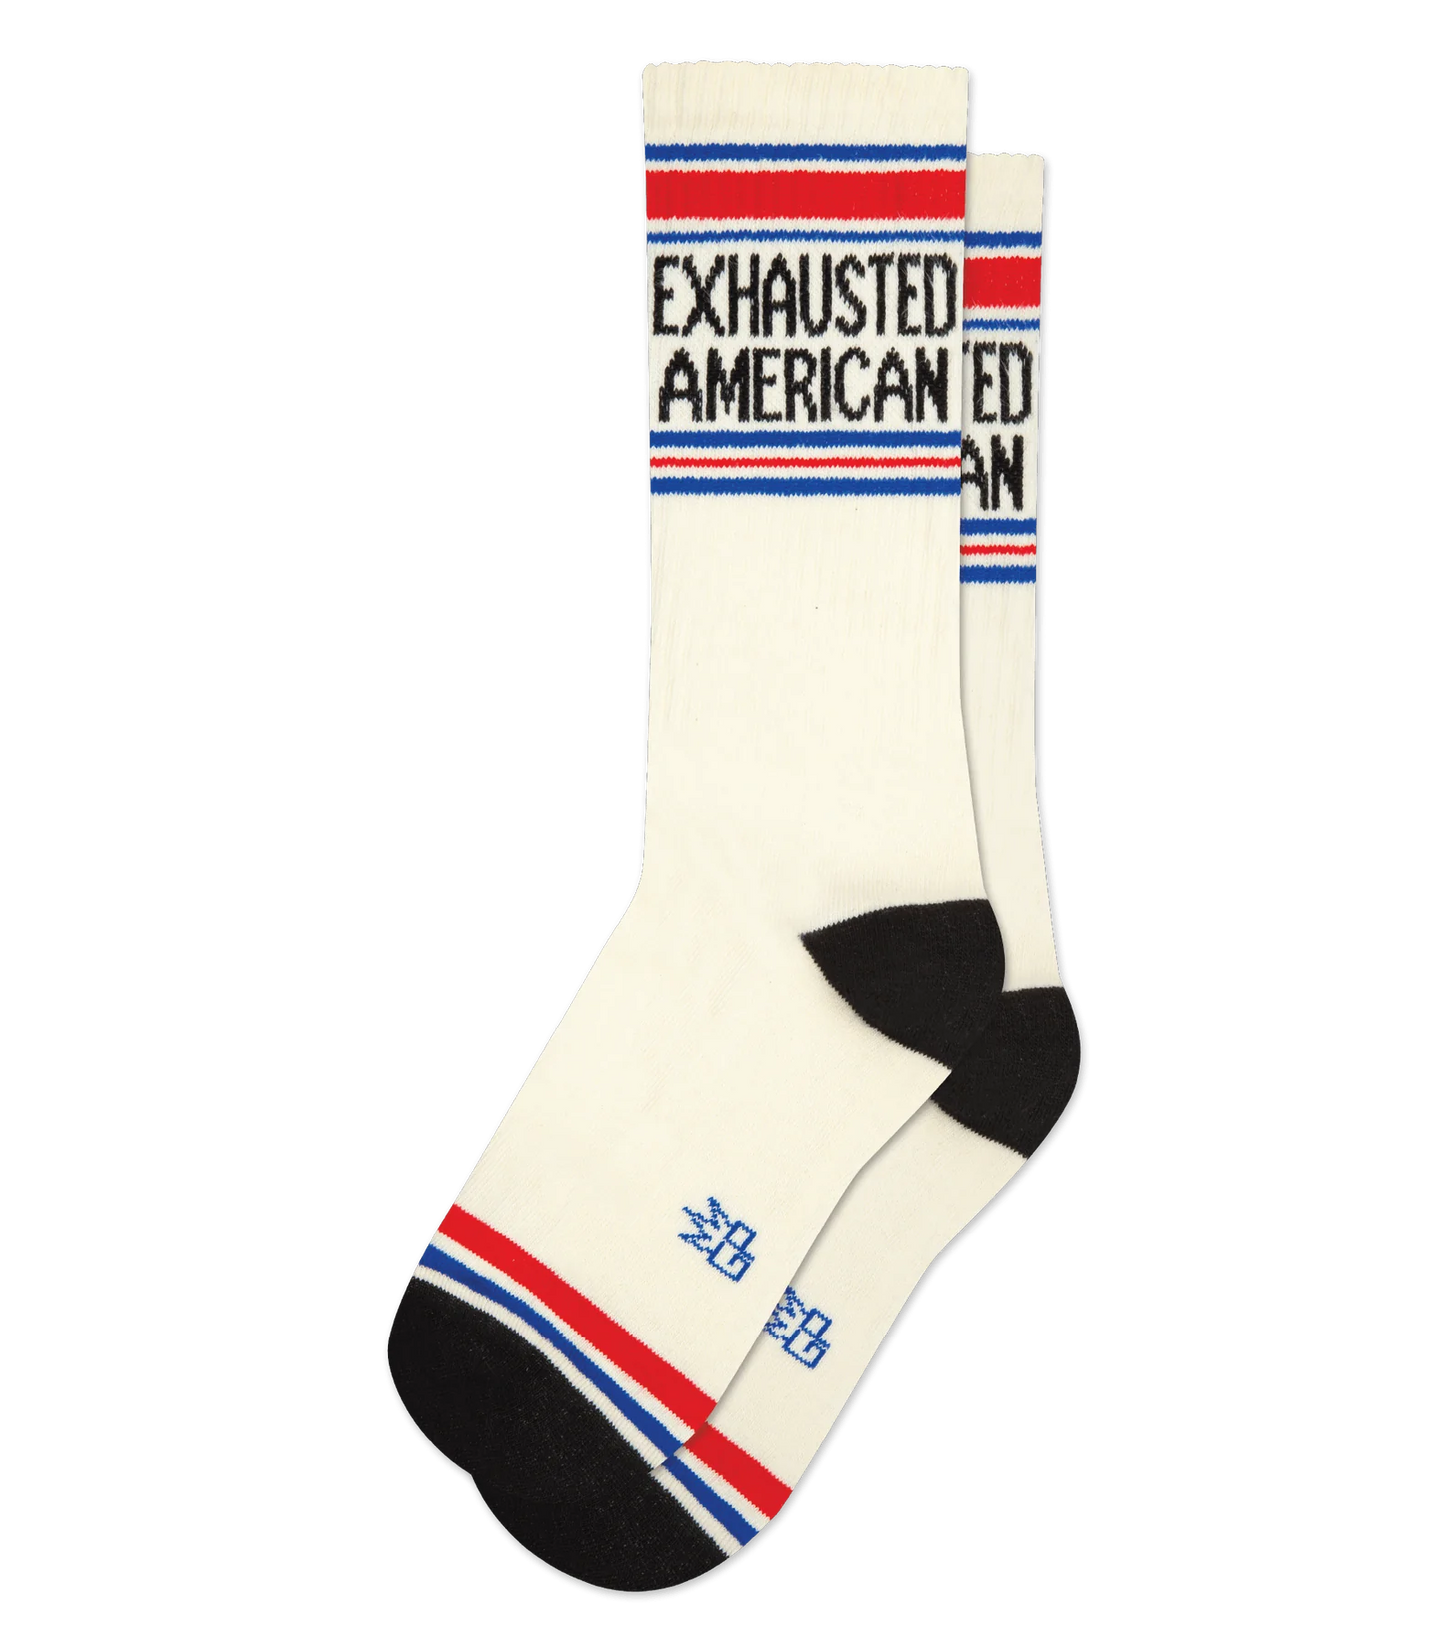 Exhausted American Socks